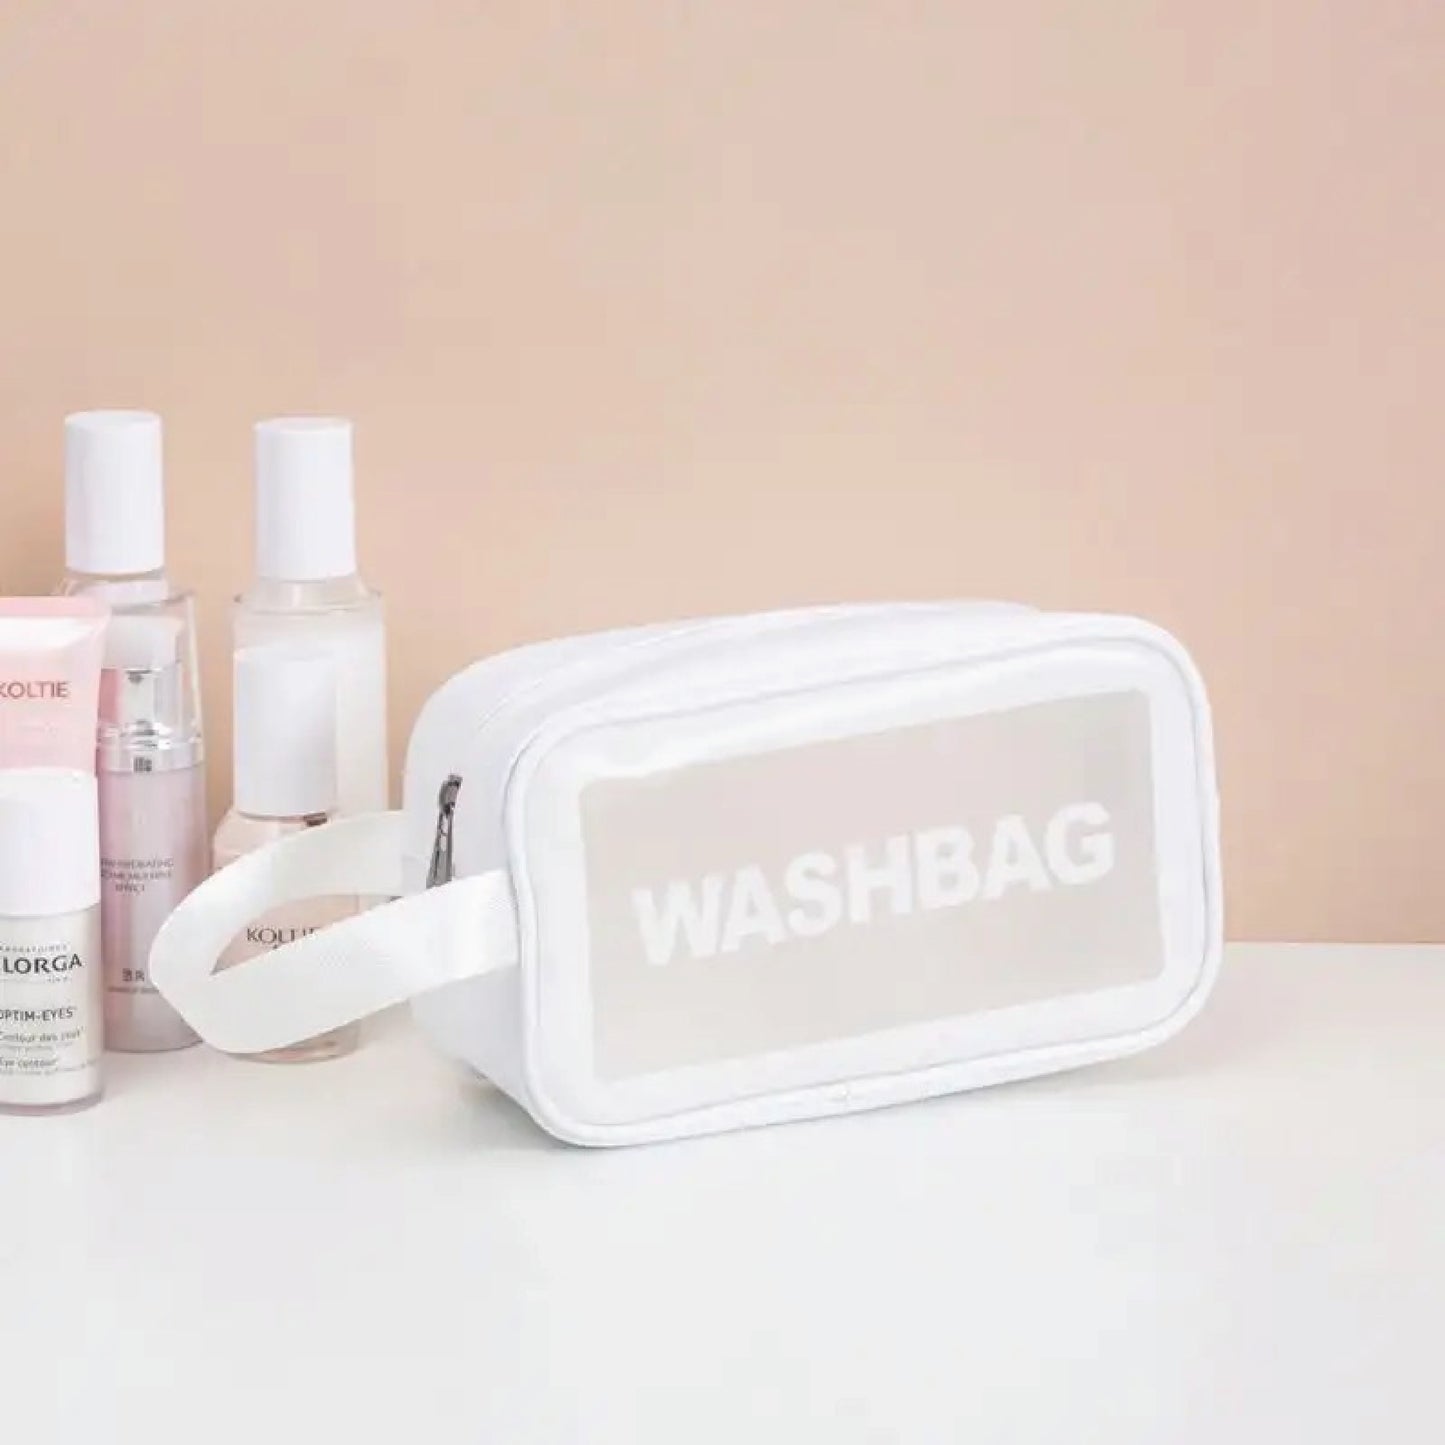 Spa Washband Set - White